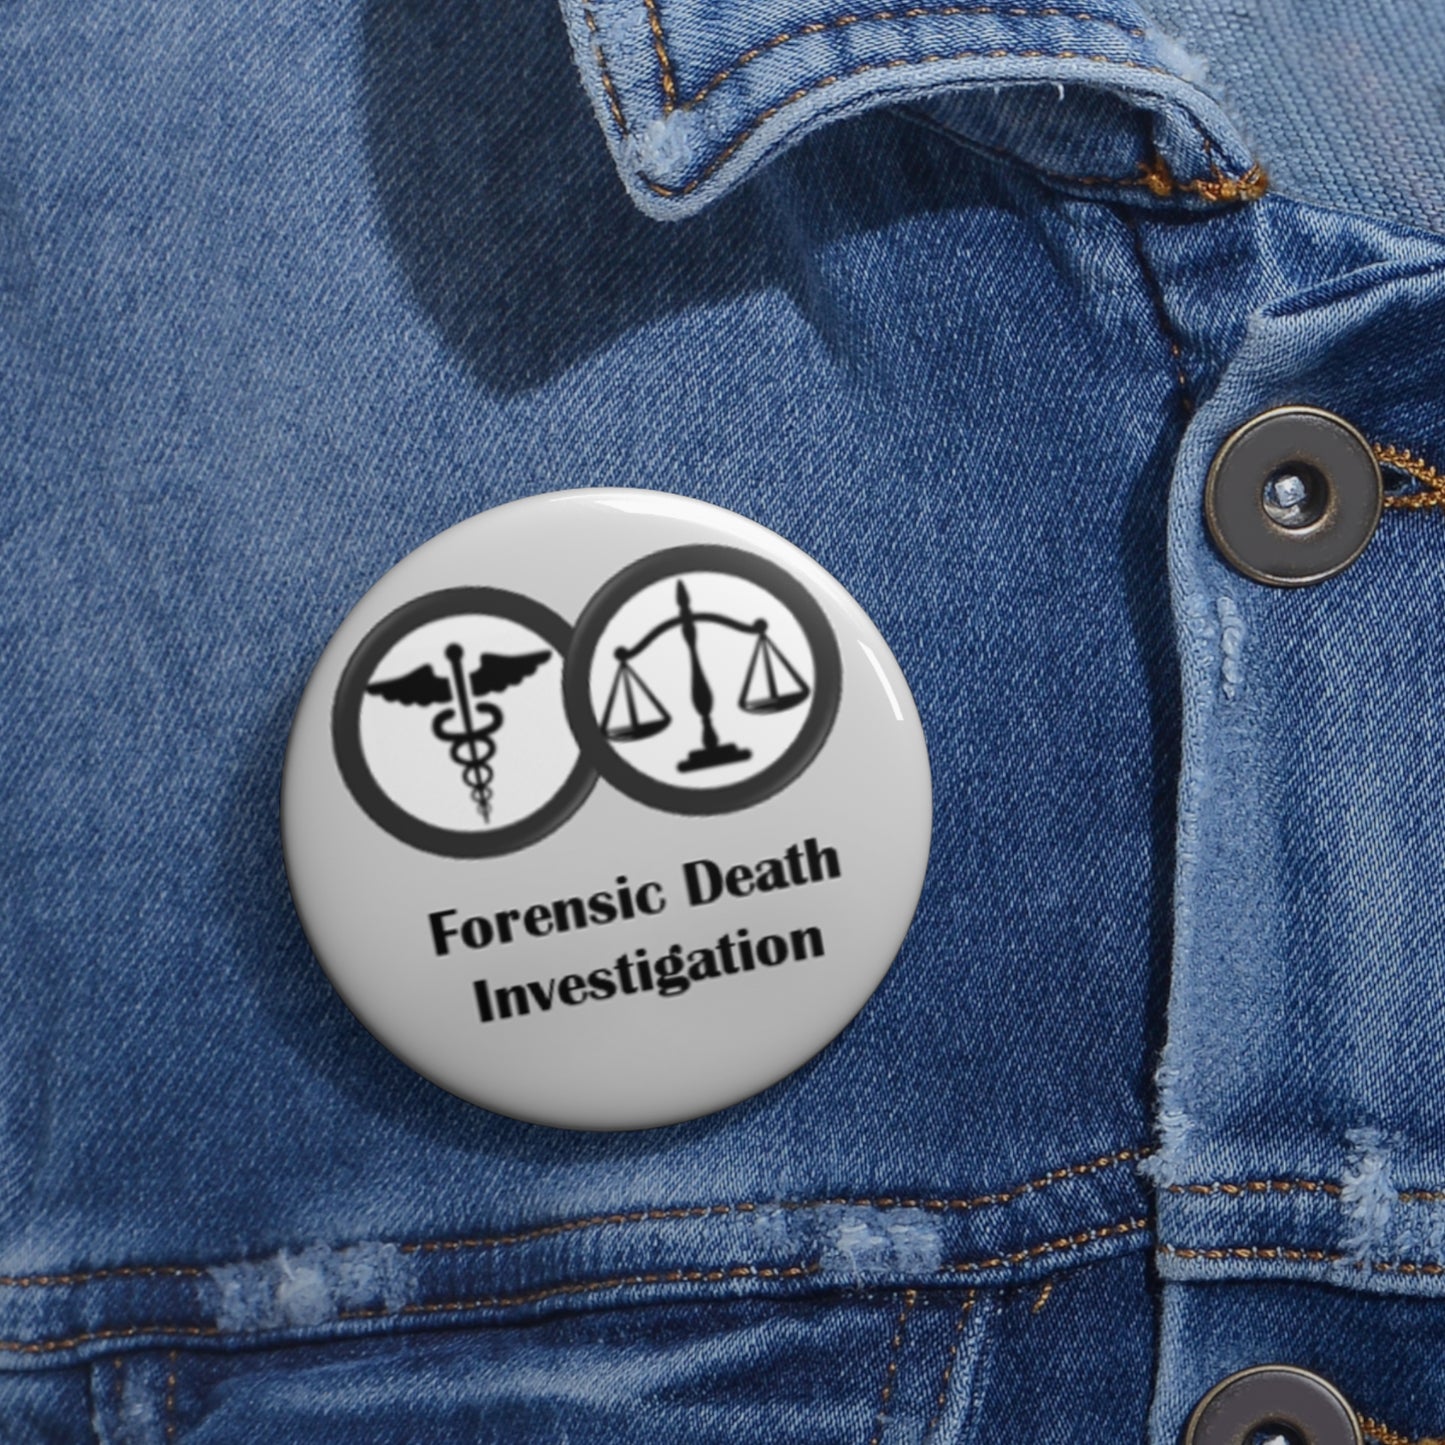 Investigación forense de muerte - Gris - Botones de pin personalizados